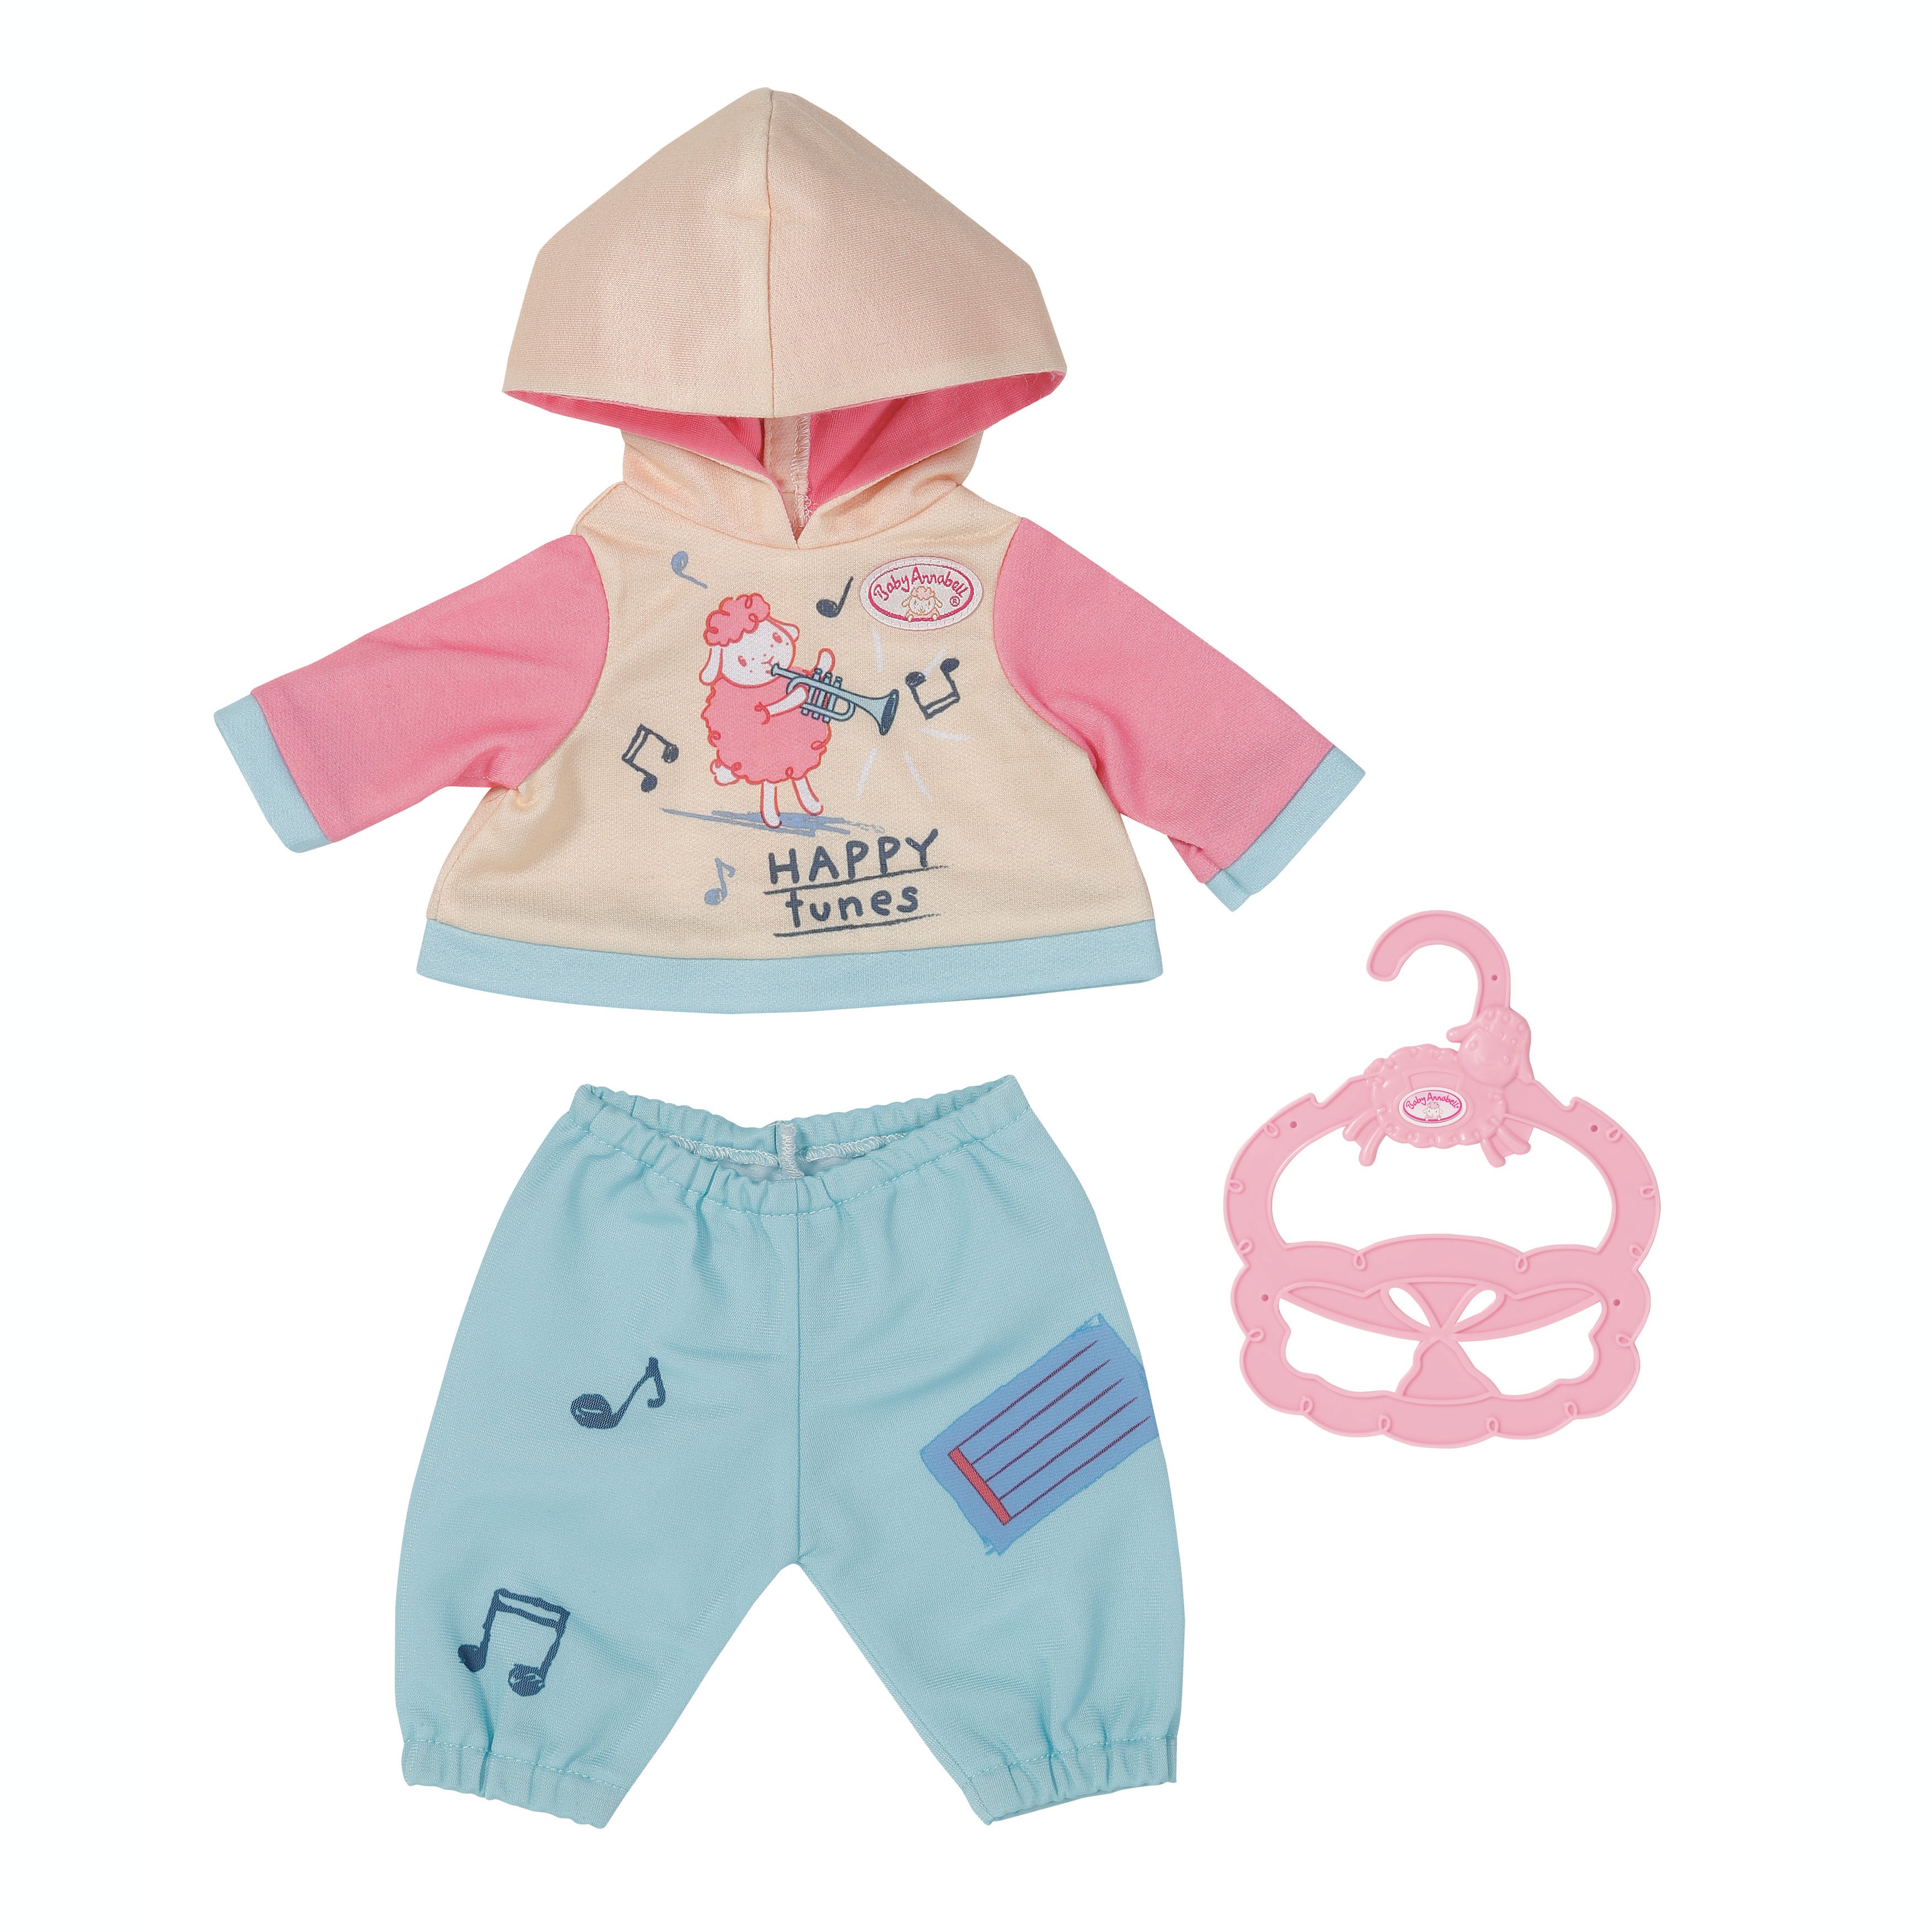 Baby Annabell - Little Jogging Suit, 36cm (706565)